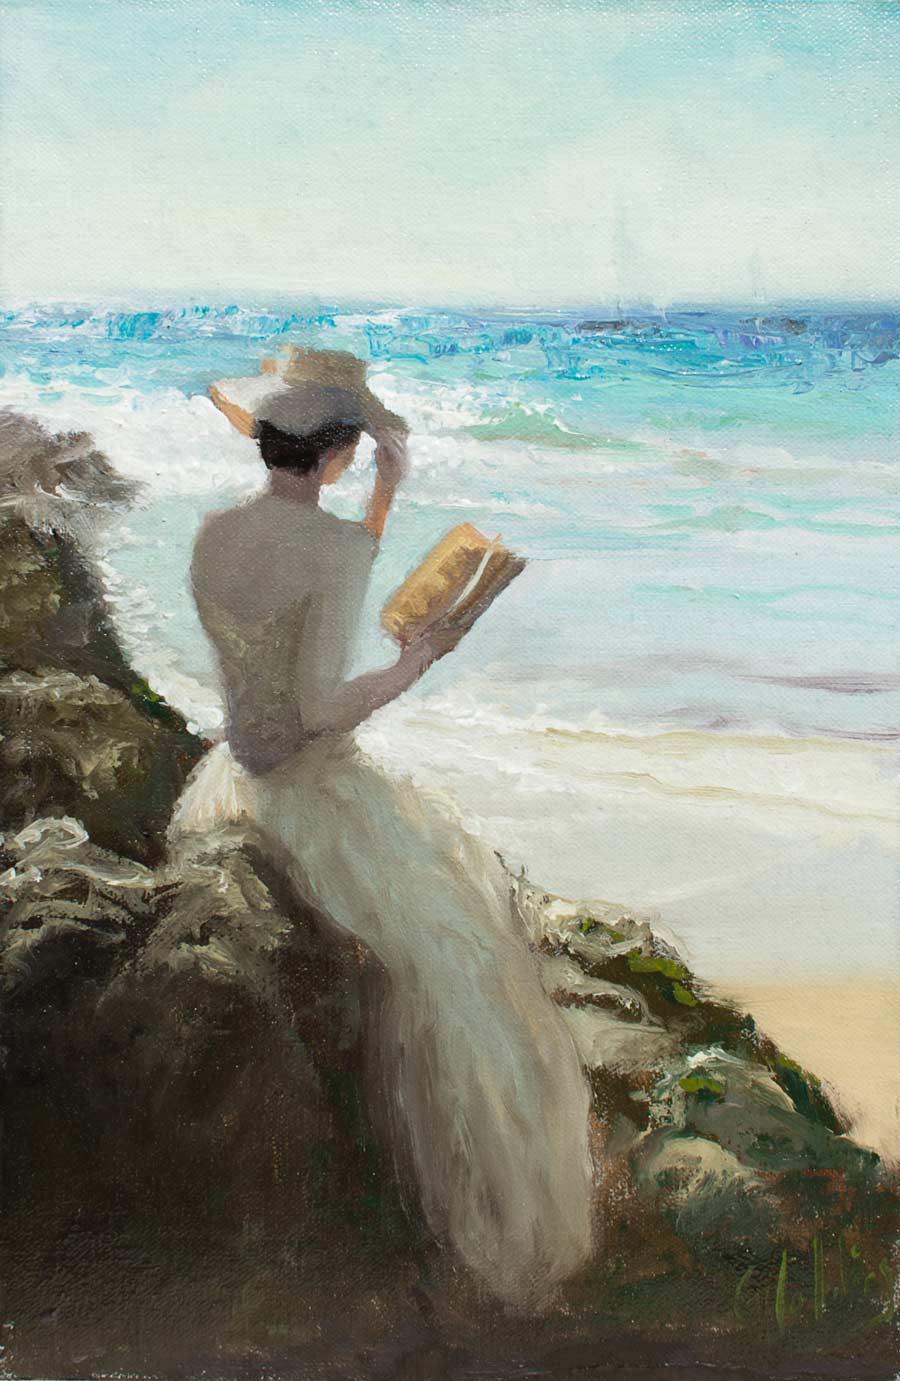 gary holding low tide light sea breeze lady reading